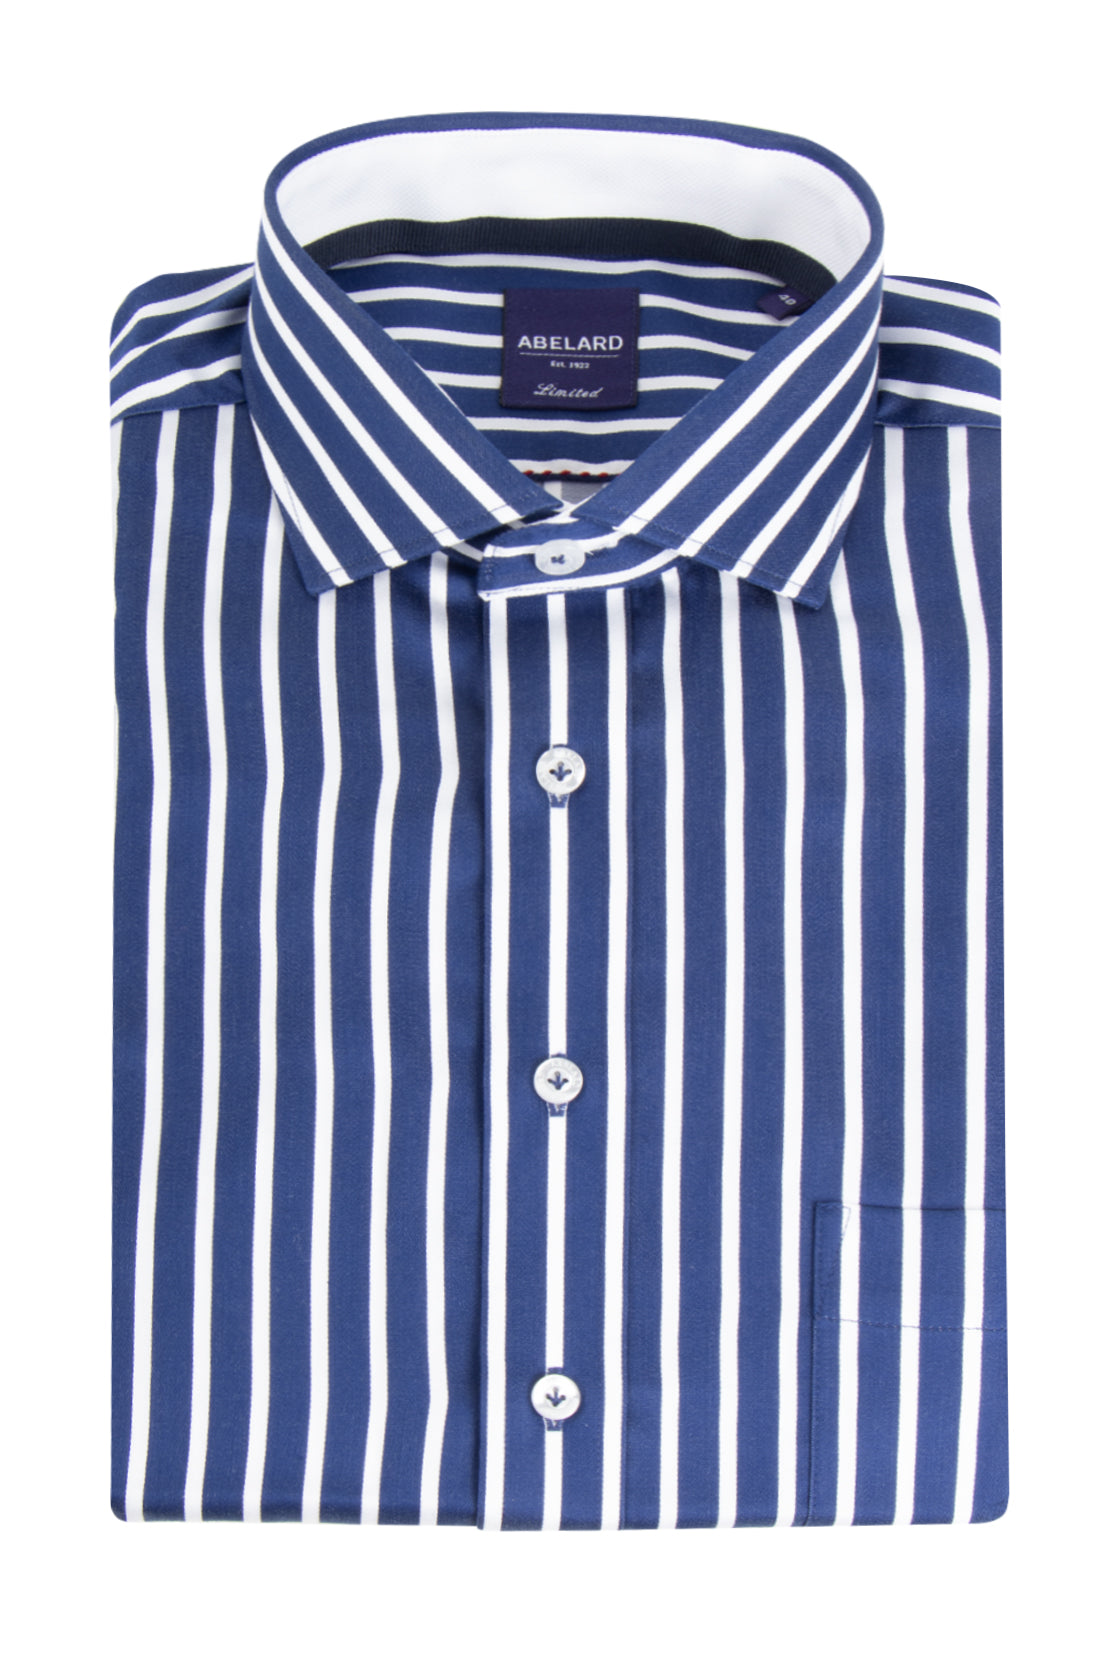 Abelard Stripe Classic Shirt Navy